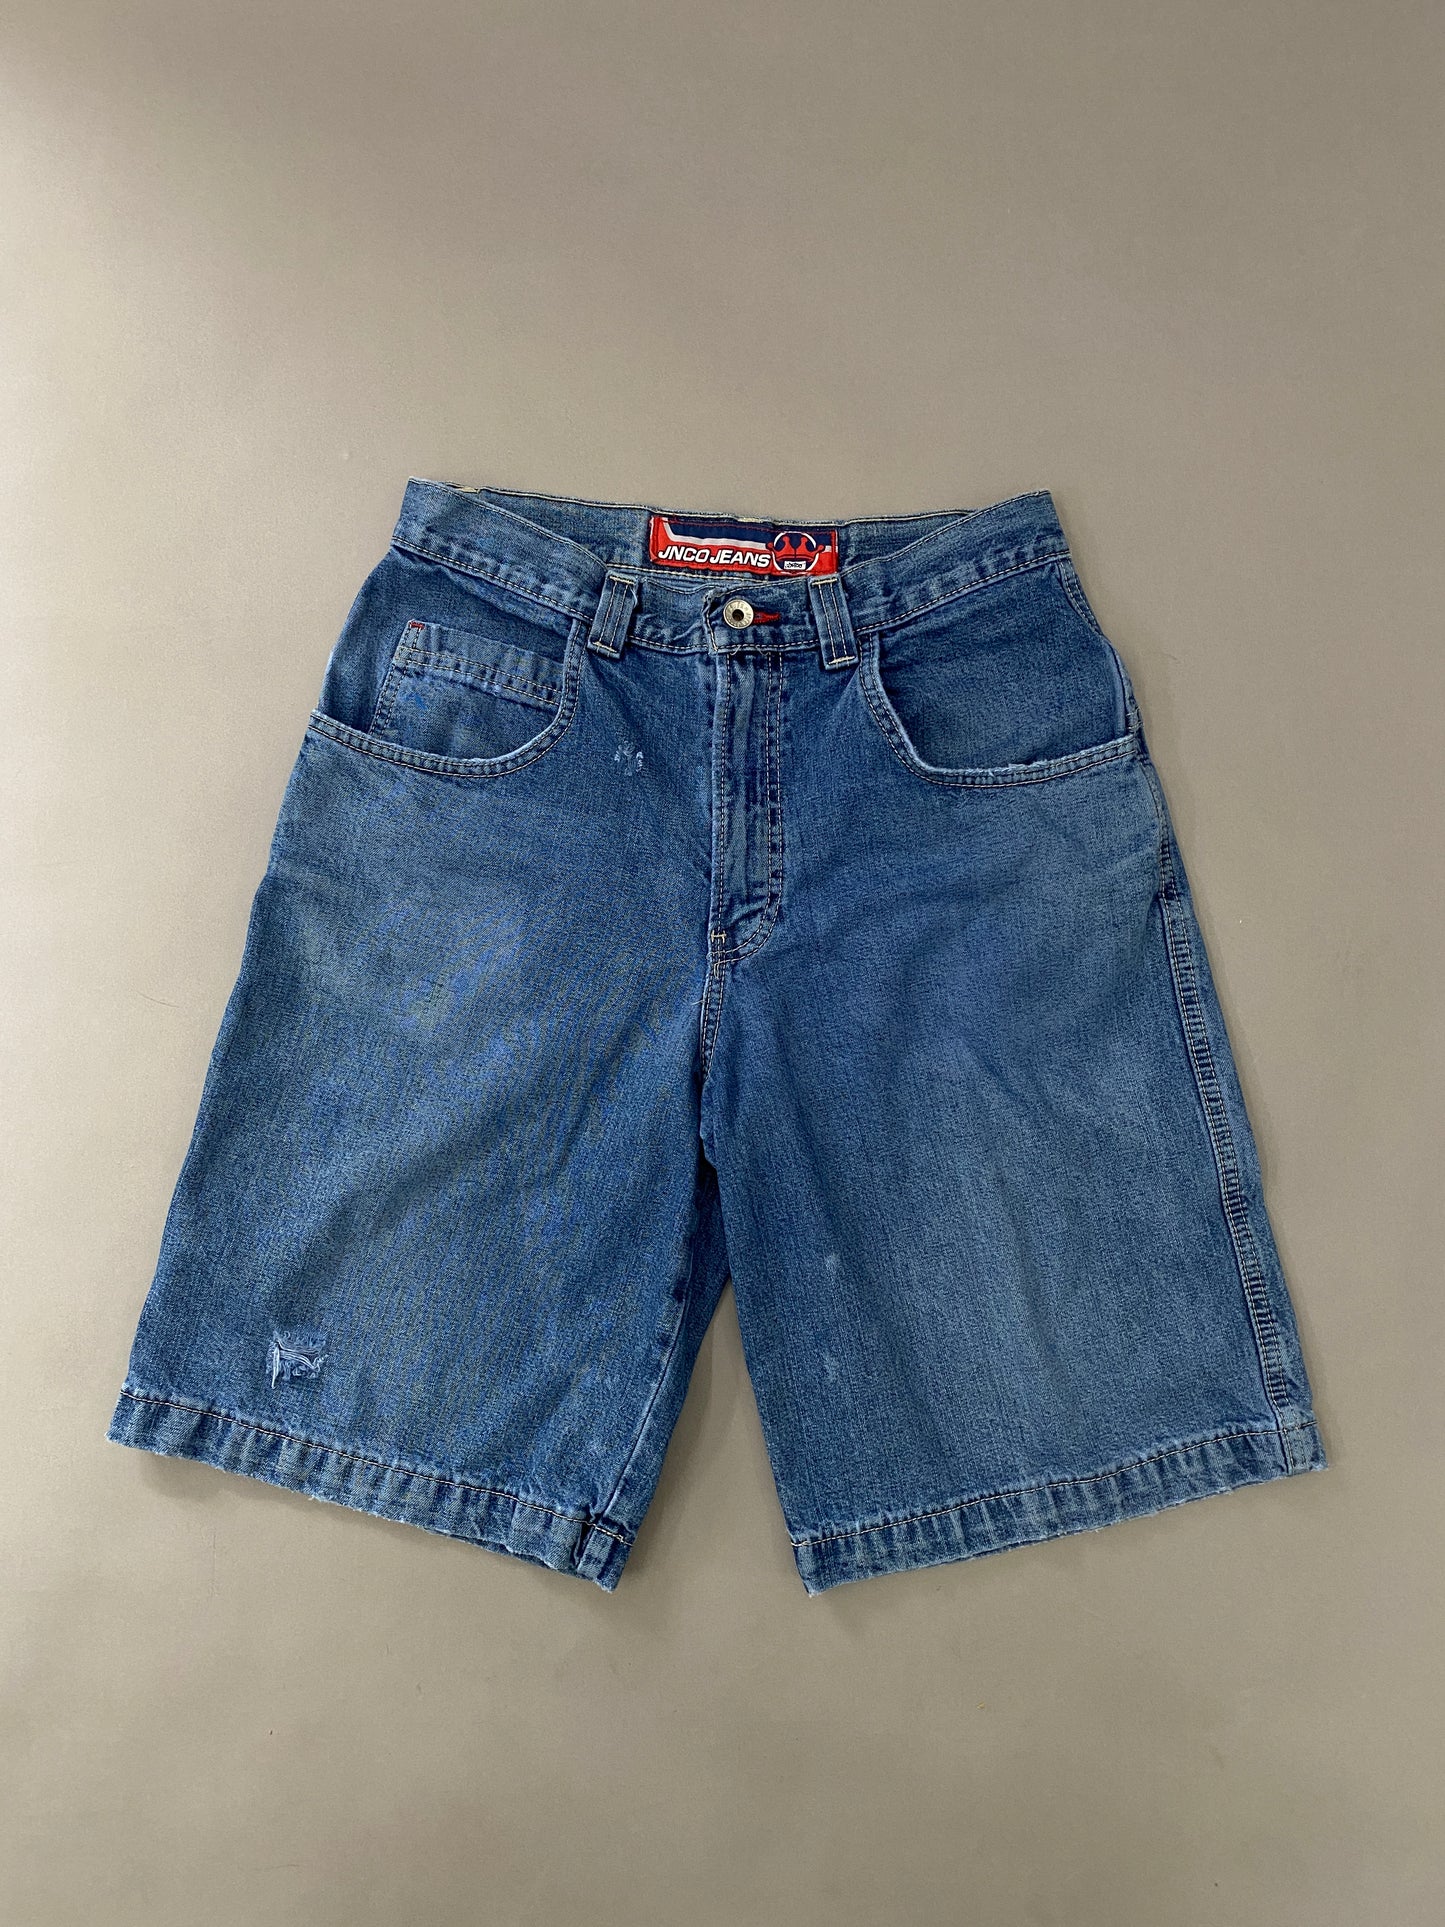 Shorts JNCO Vintage - 32